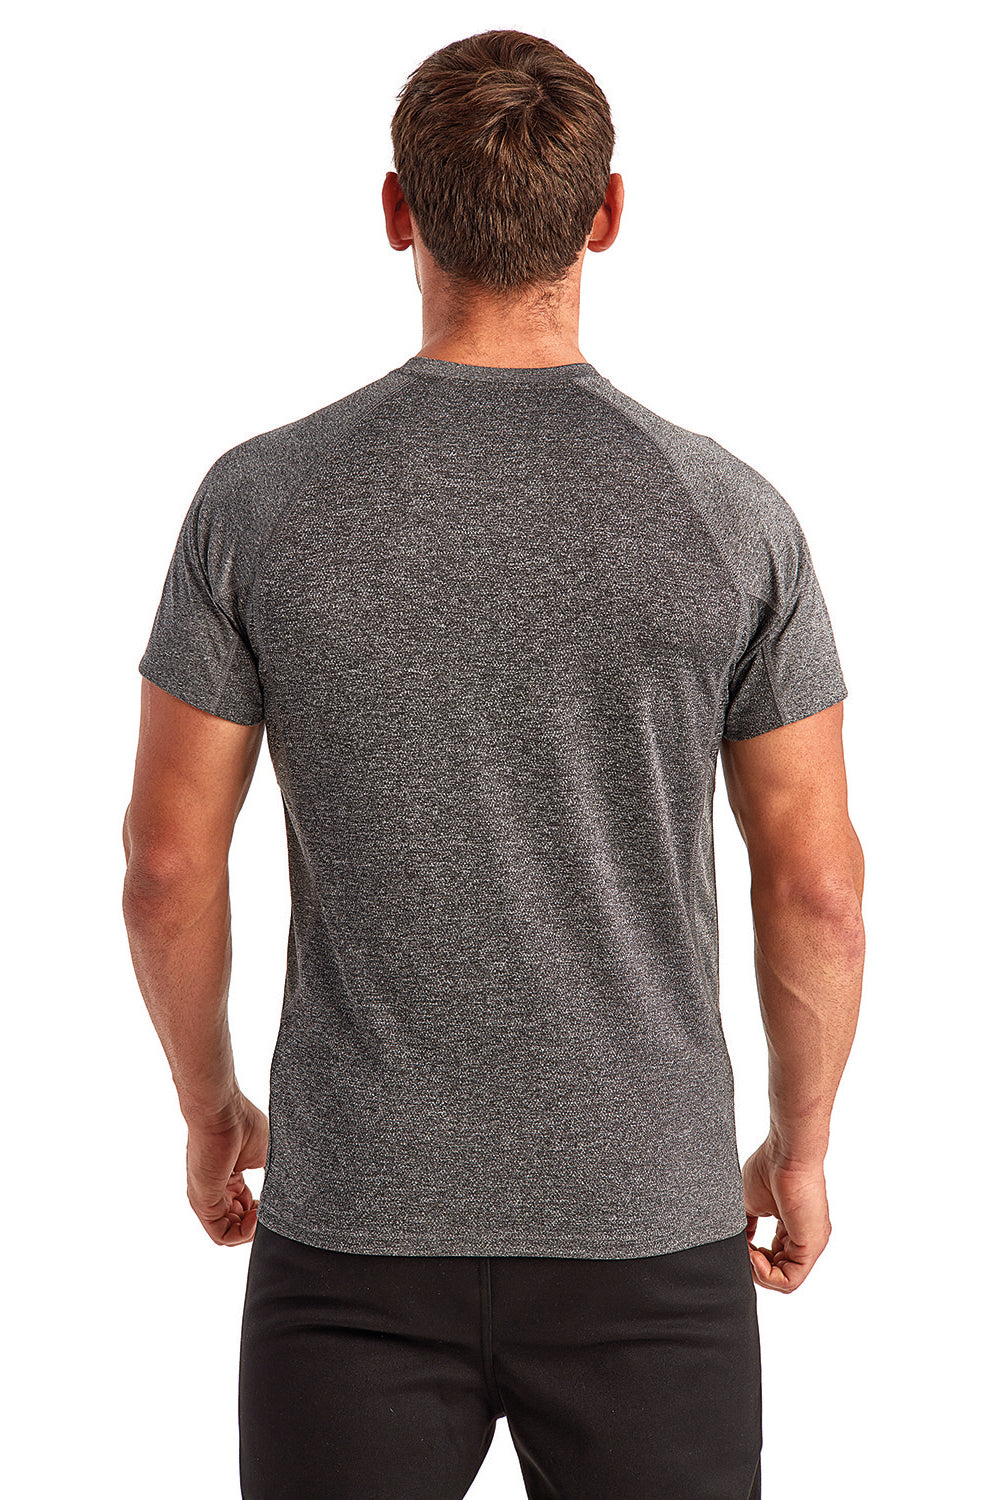 TriDri TD011 Mens Panelled Tech Moisture Wicking Short Sleeve Crewneck T-Shirt Black Melange Back